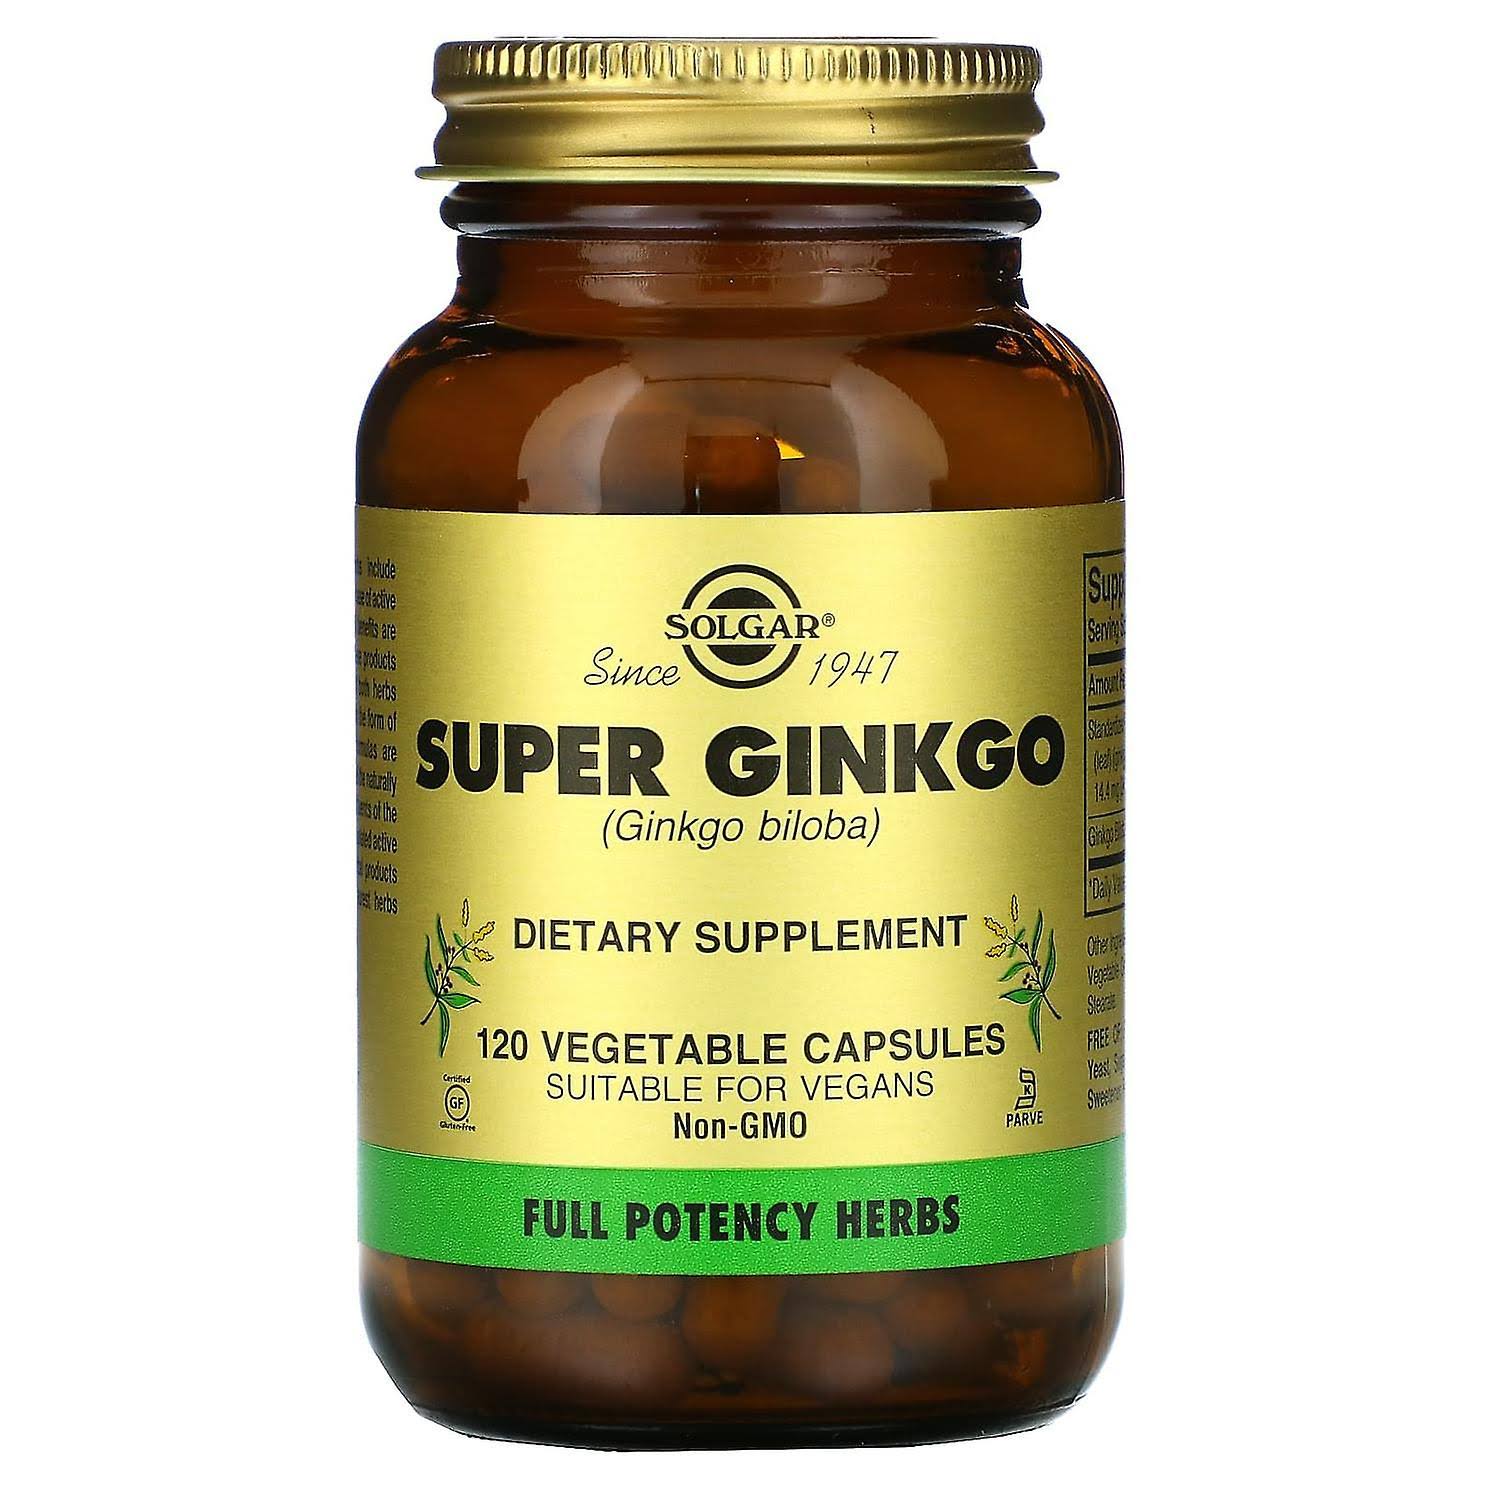 Solgar Super Ginkgo Dietary Supplement - 120 Vegetable Capsules